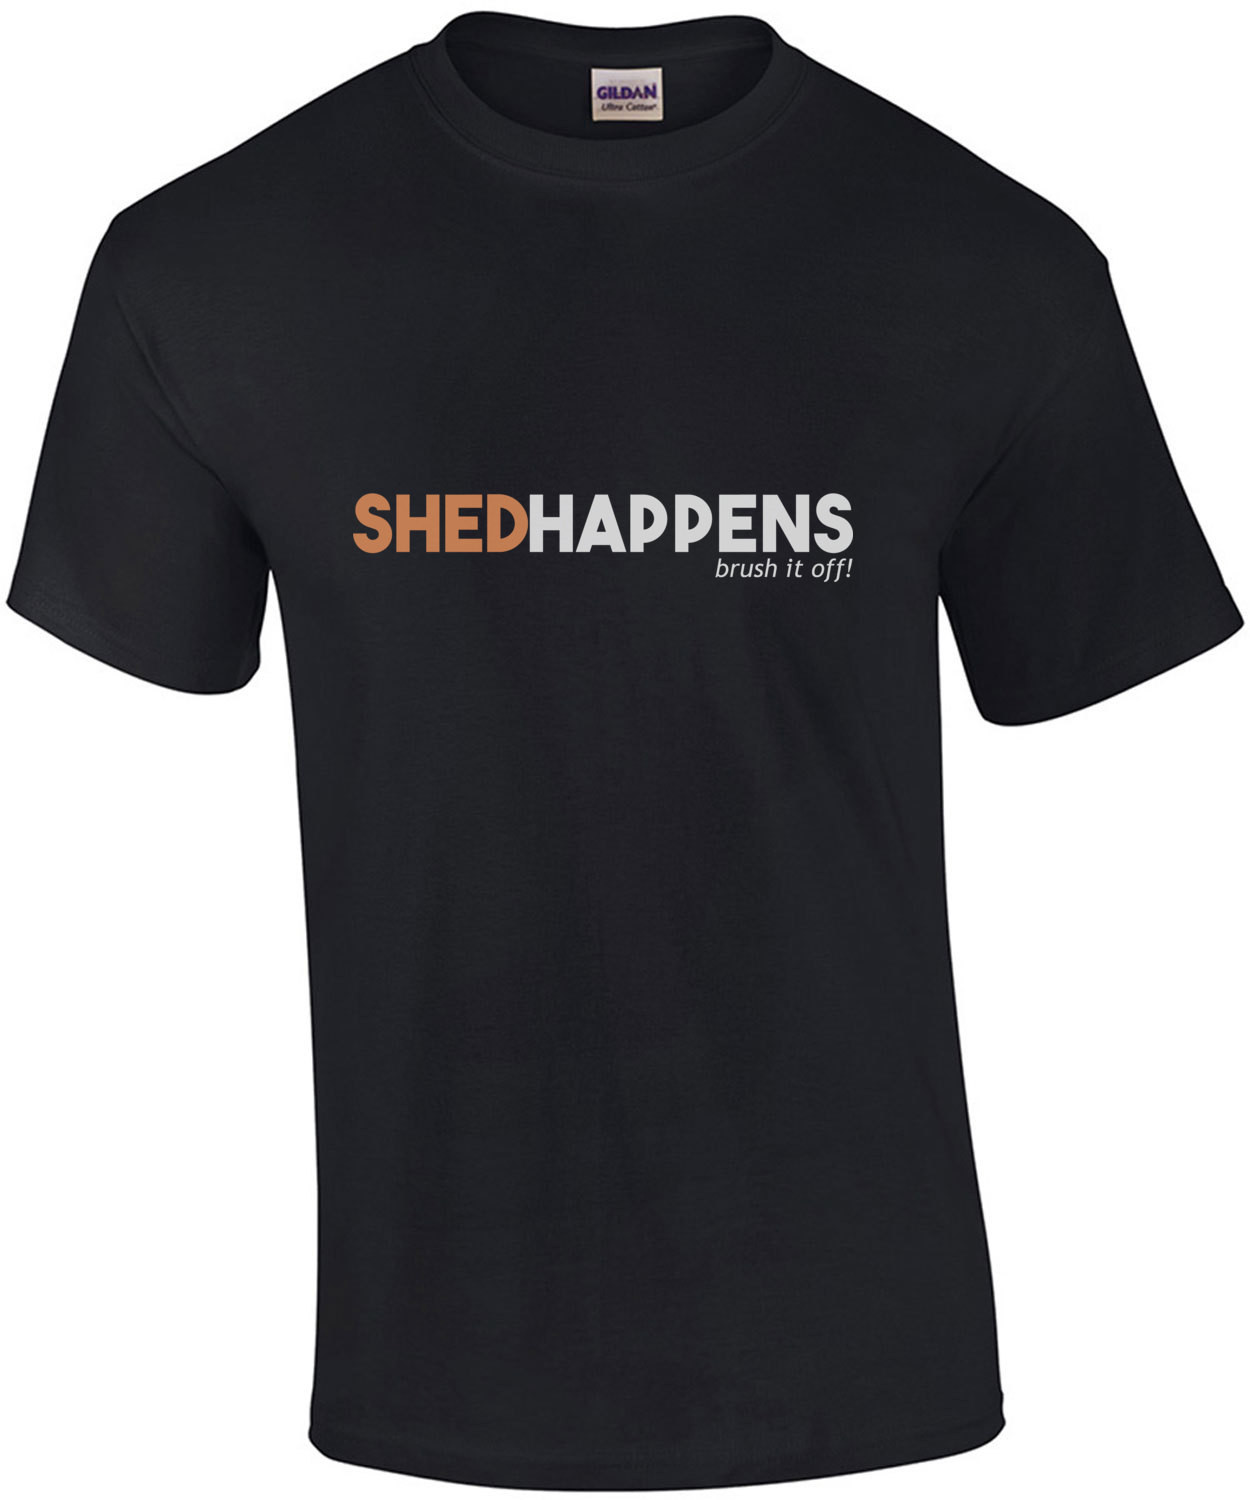 Shed Happens Brush it off - Dog lover T-Shirt